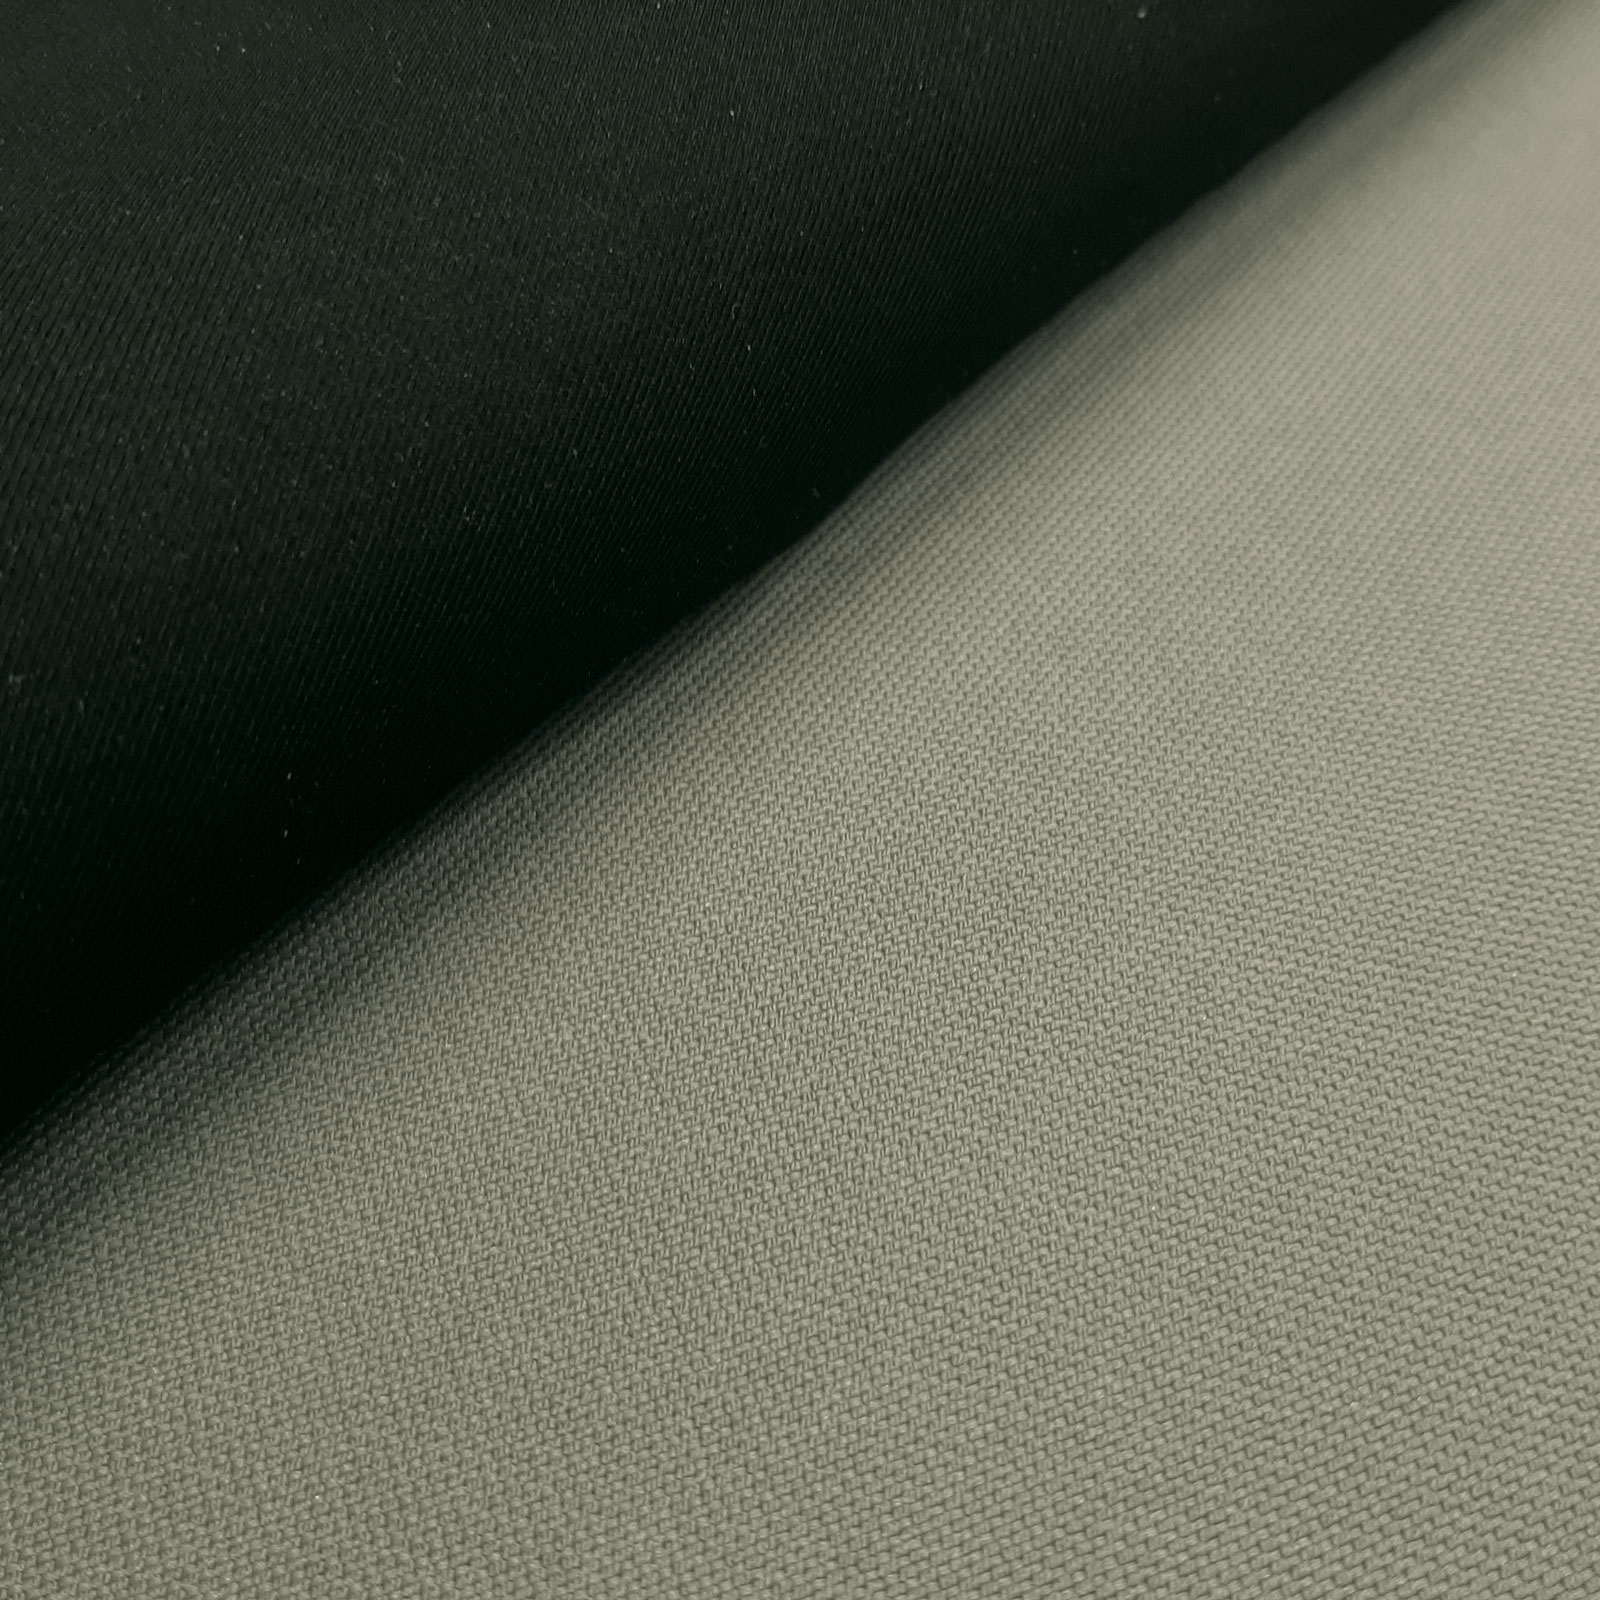 Delmiros - Laminado Keprotec® de 3 camadas - Cinzento - por 10 cm